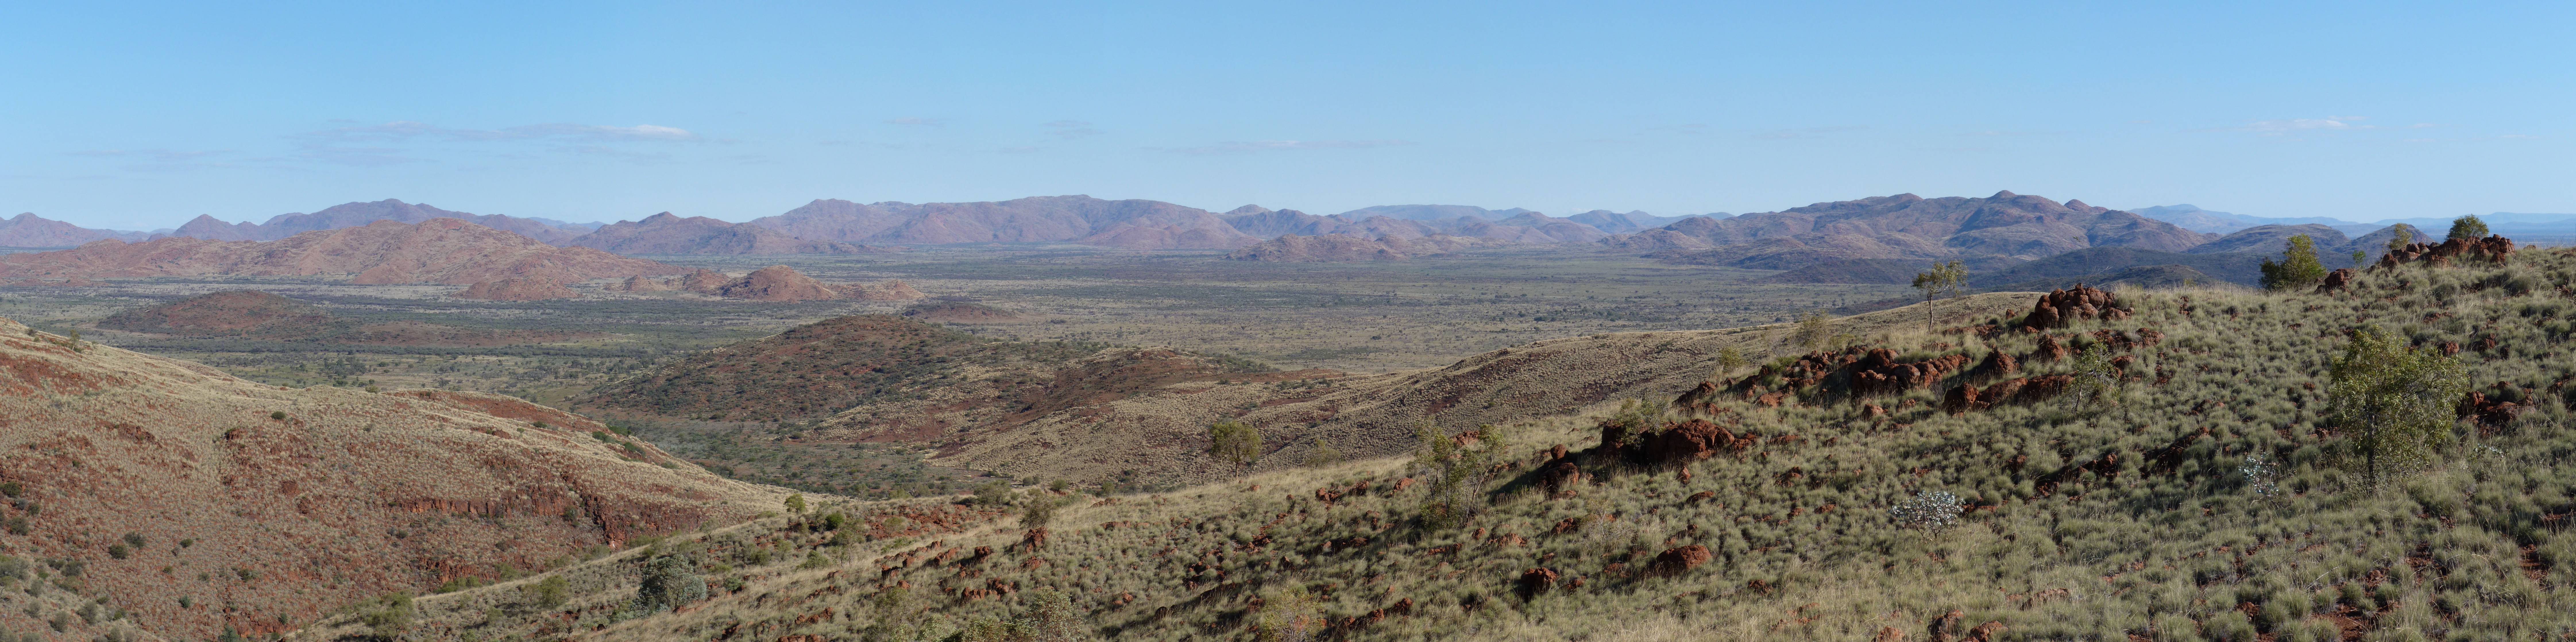 Panoramic of the Musgrave Rabges